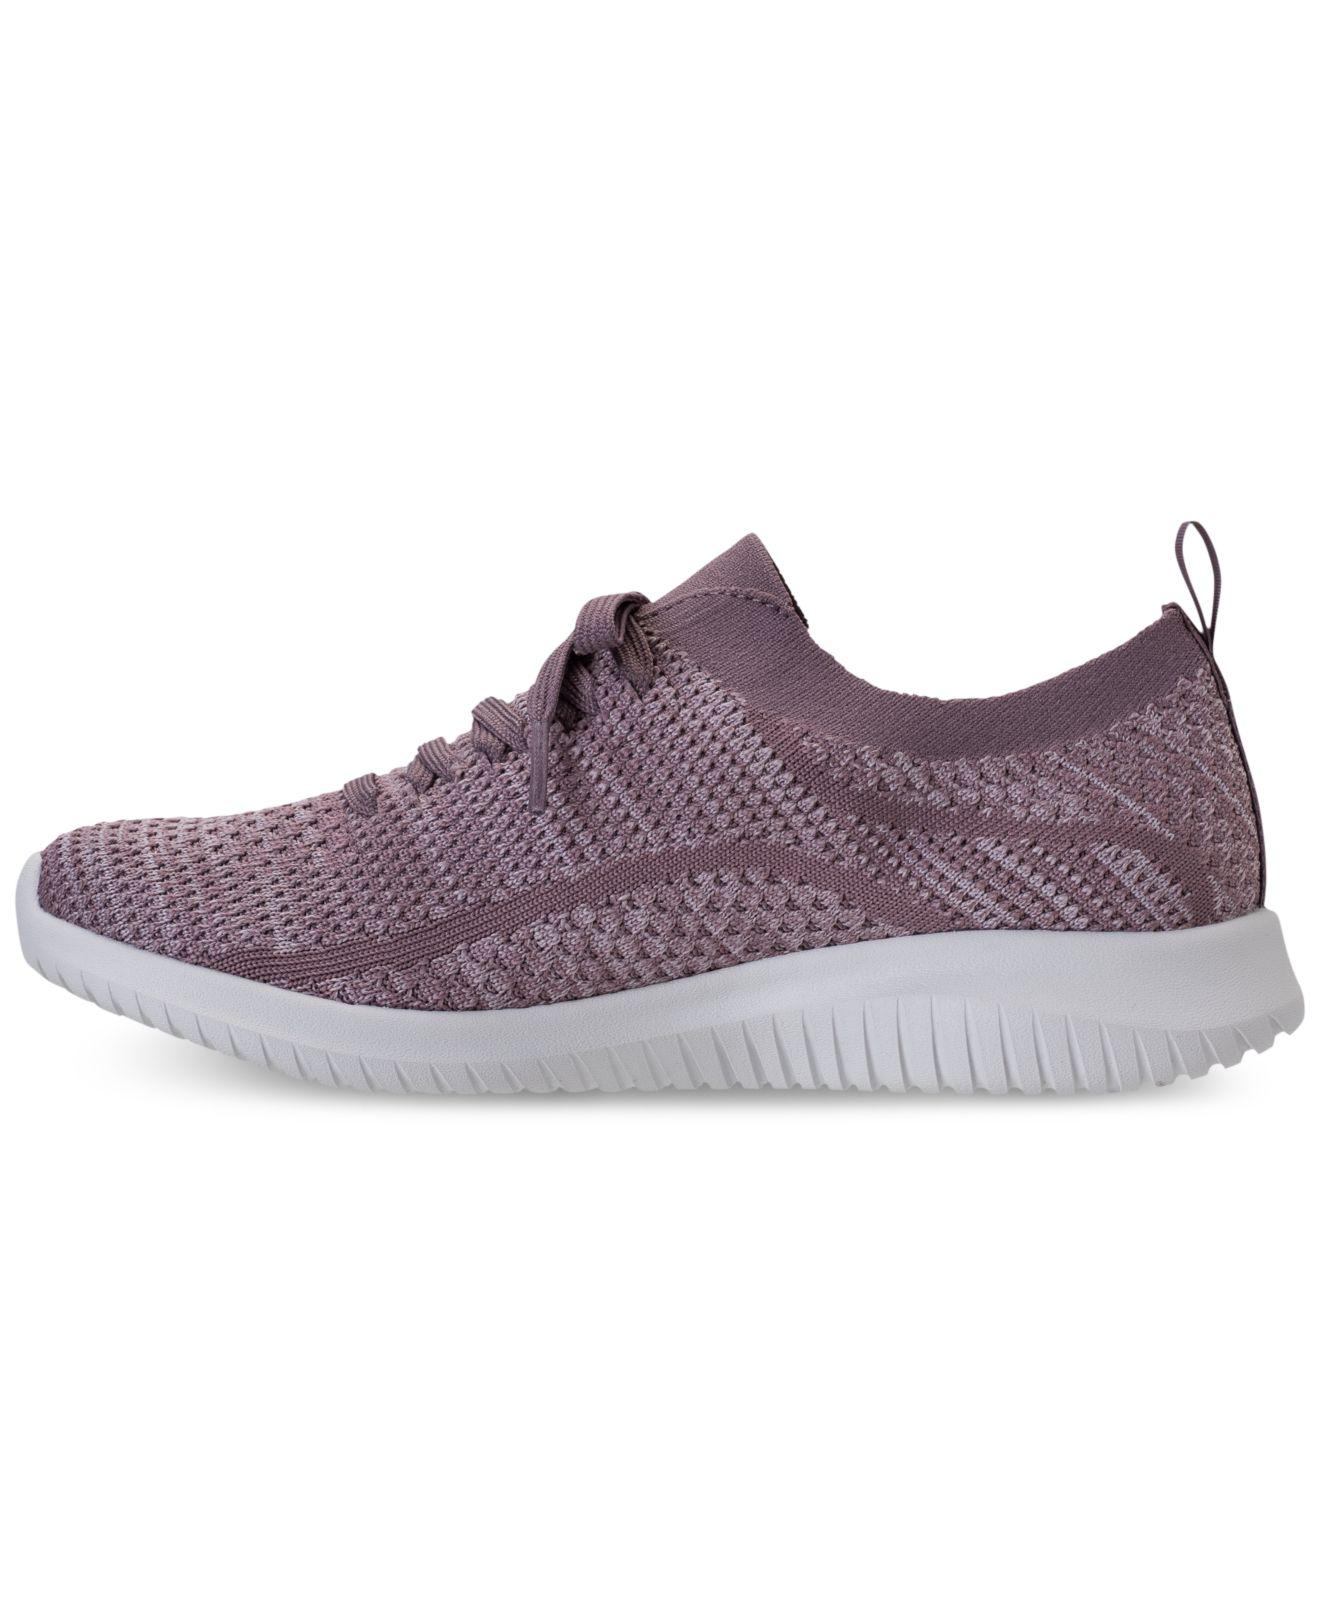 skechers ultra flex statements purple Shop Clothing & Shoes Online